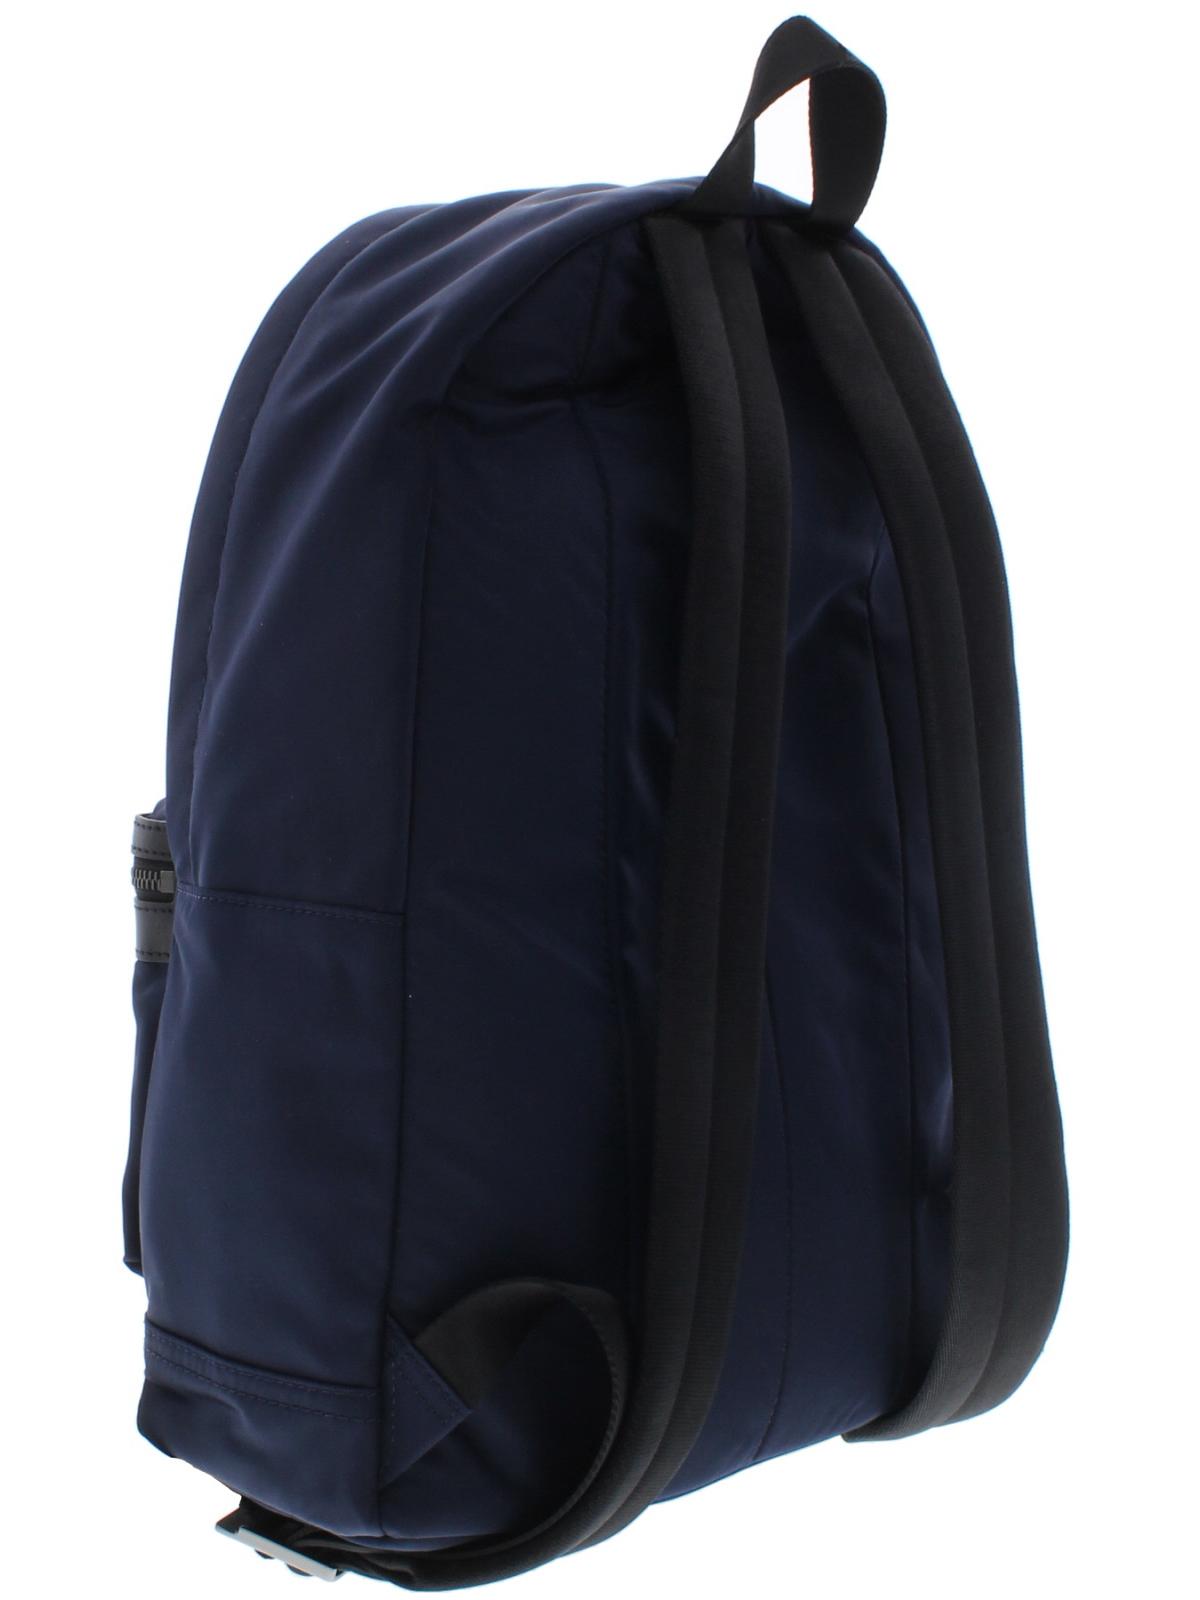 Michael Kors Mens Kent Nylon Backpack - Indigo - 33F5LKNB2C-401 - image 2 of 2